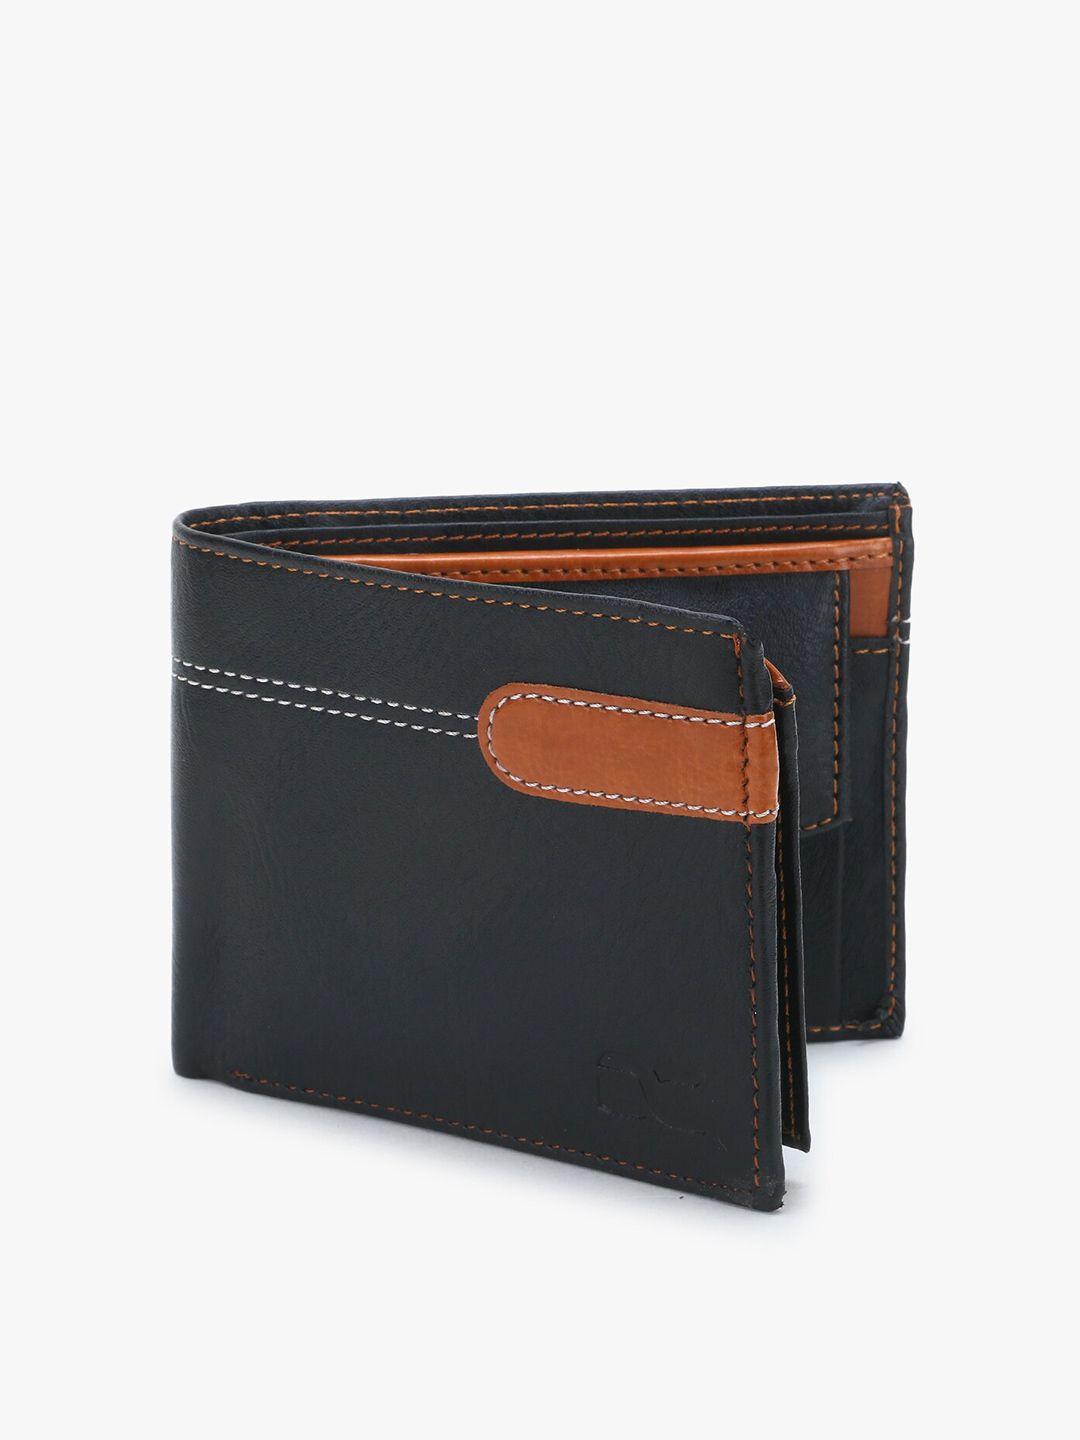 dezire crafts men black & tan textured two fold wallet